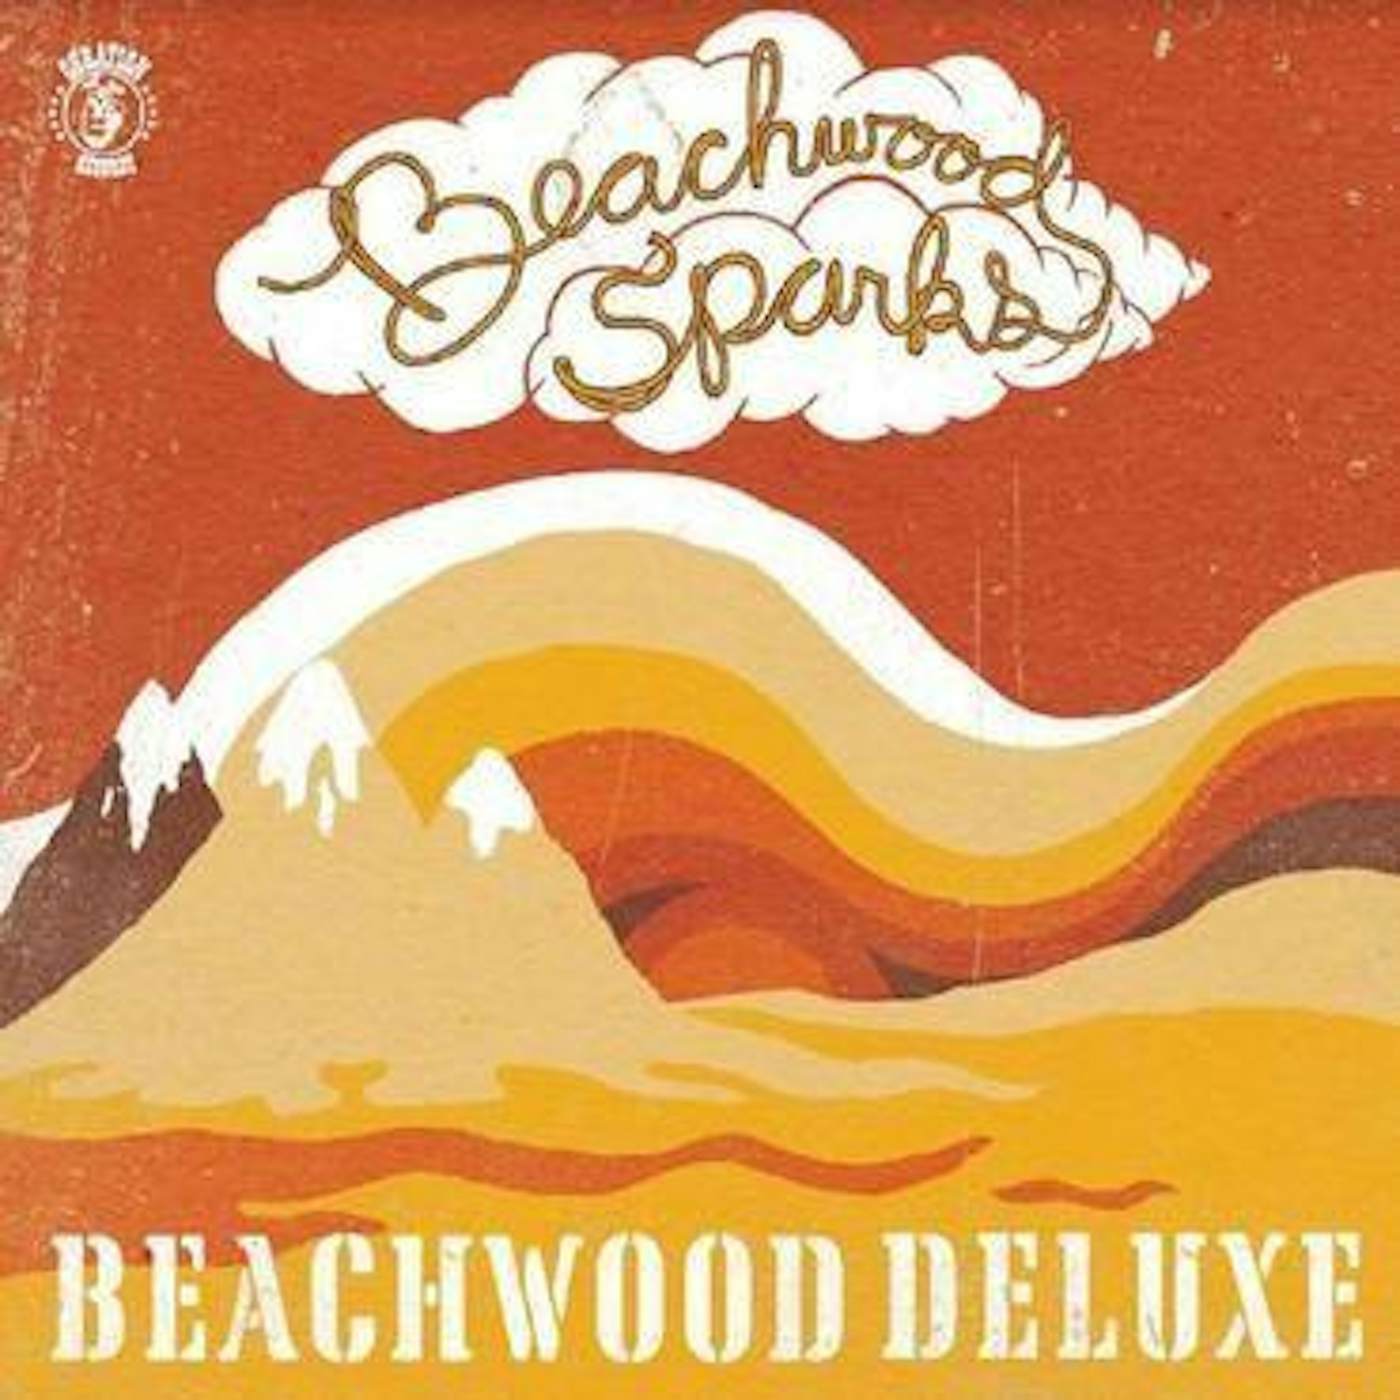 Beachwood Sparks BEACHWOOD DELUXE CD